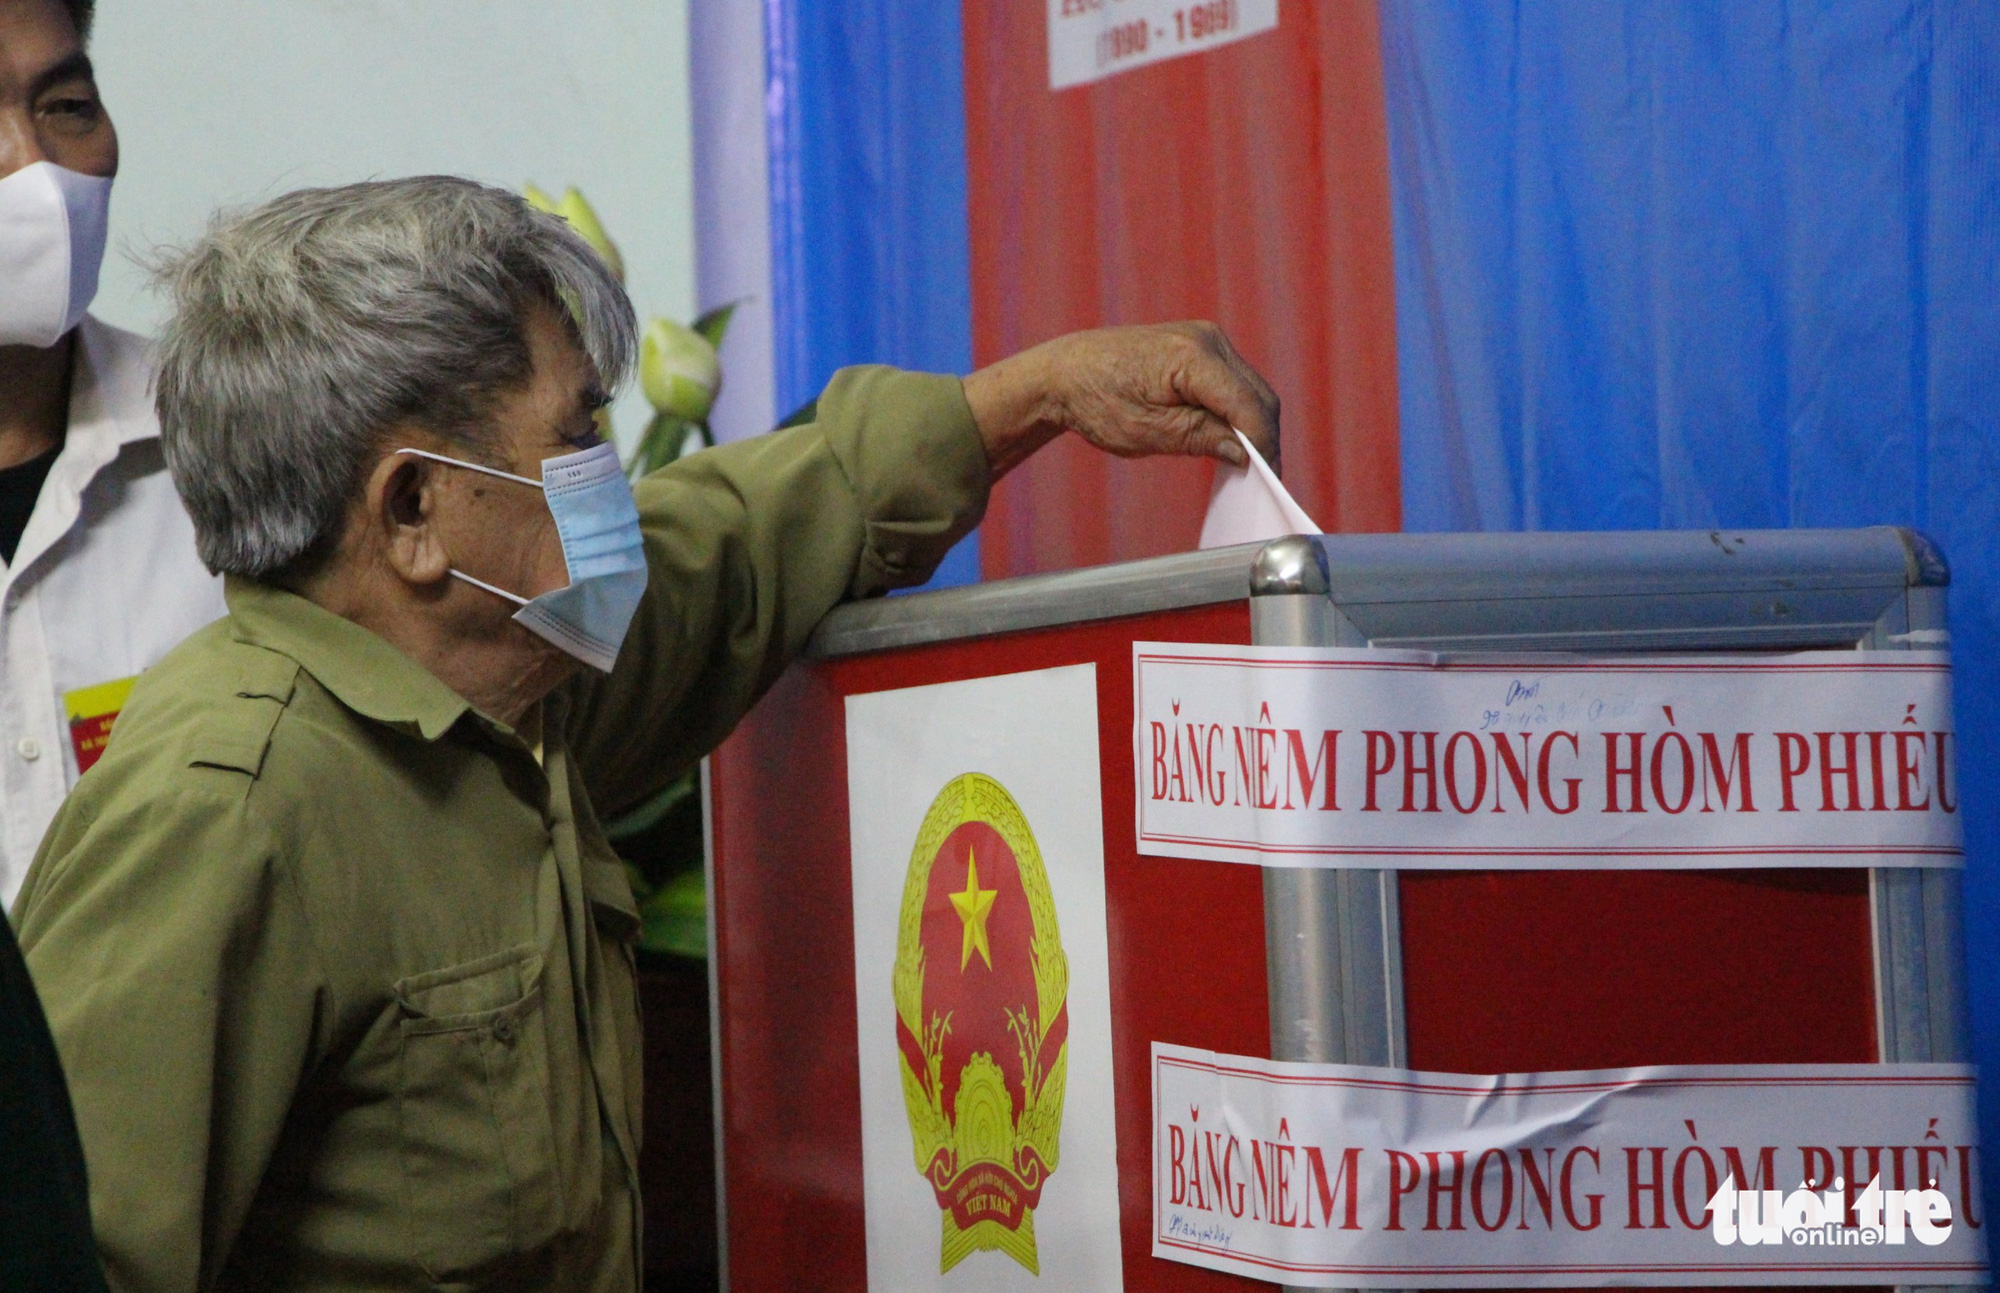 A resident casts his vote during the election in Trang Viet Commune, Me Linh District, Hanoi, June 6, 2021. Photo: Ha Quan / Tuoi Tre